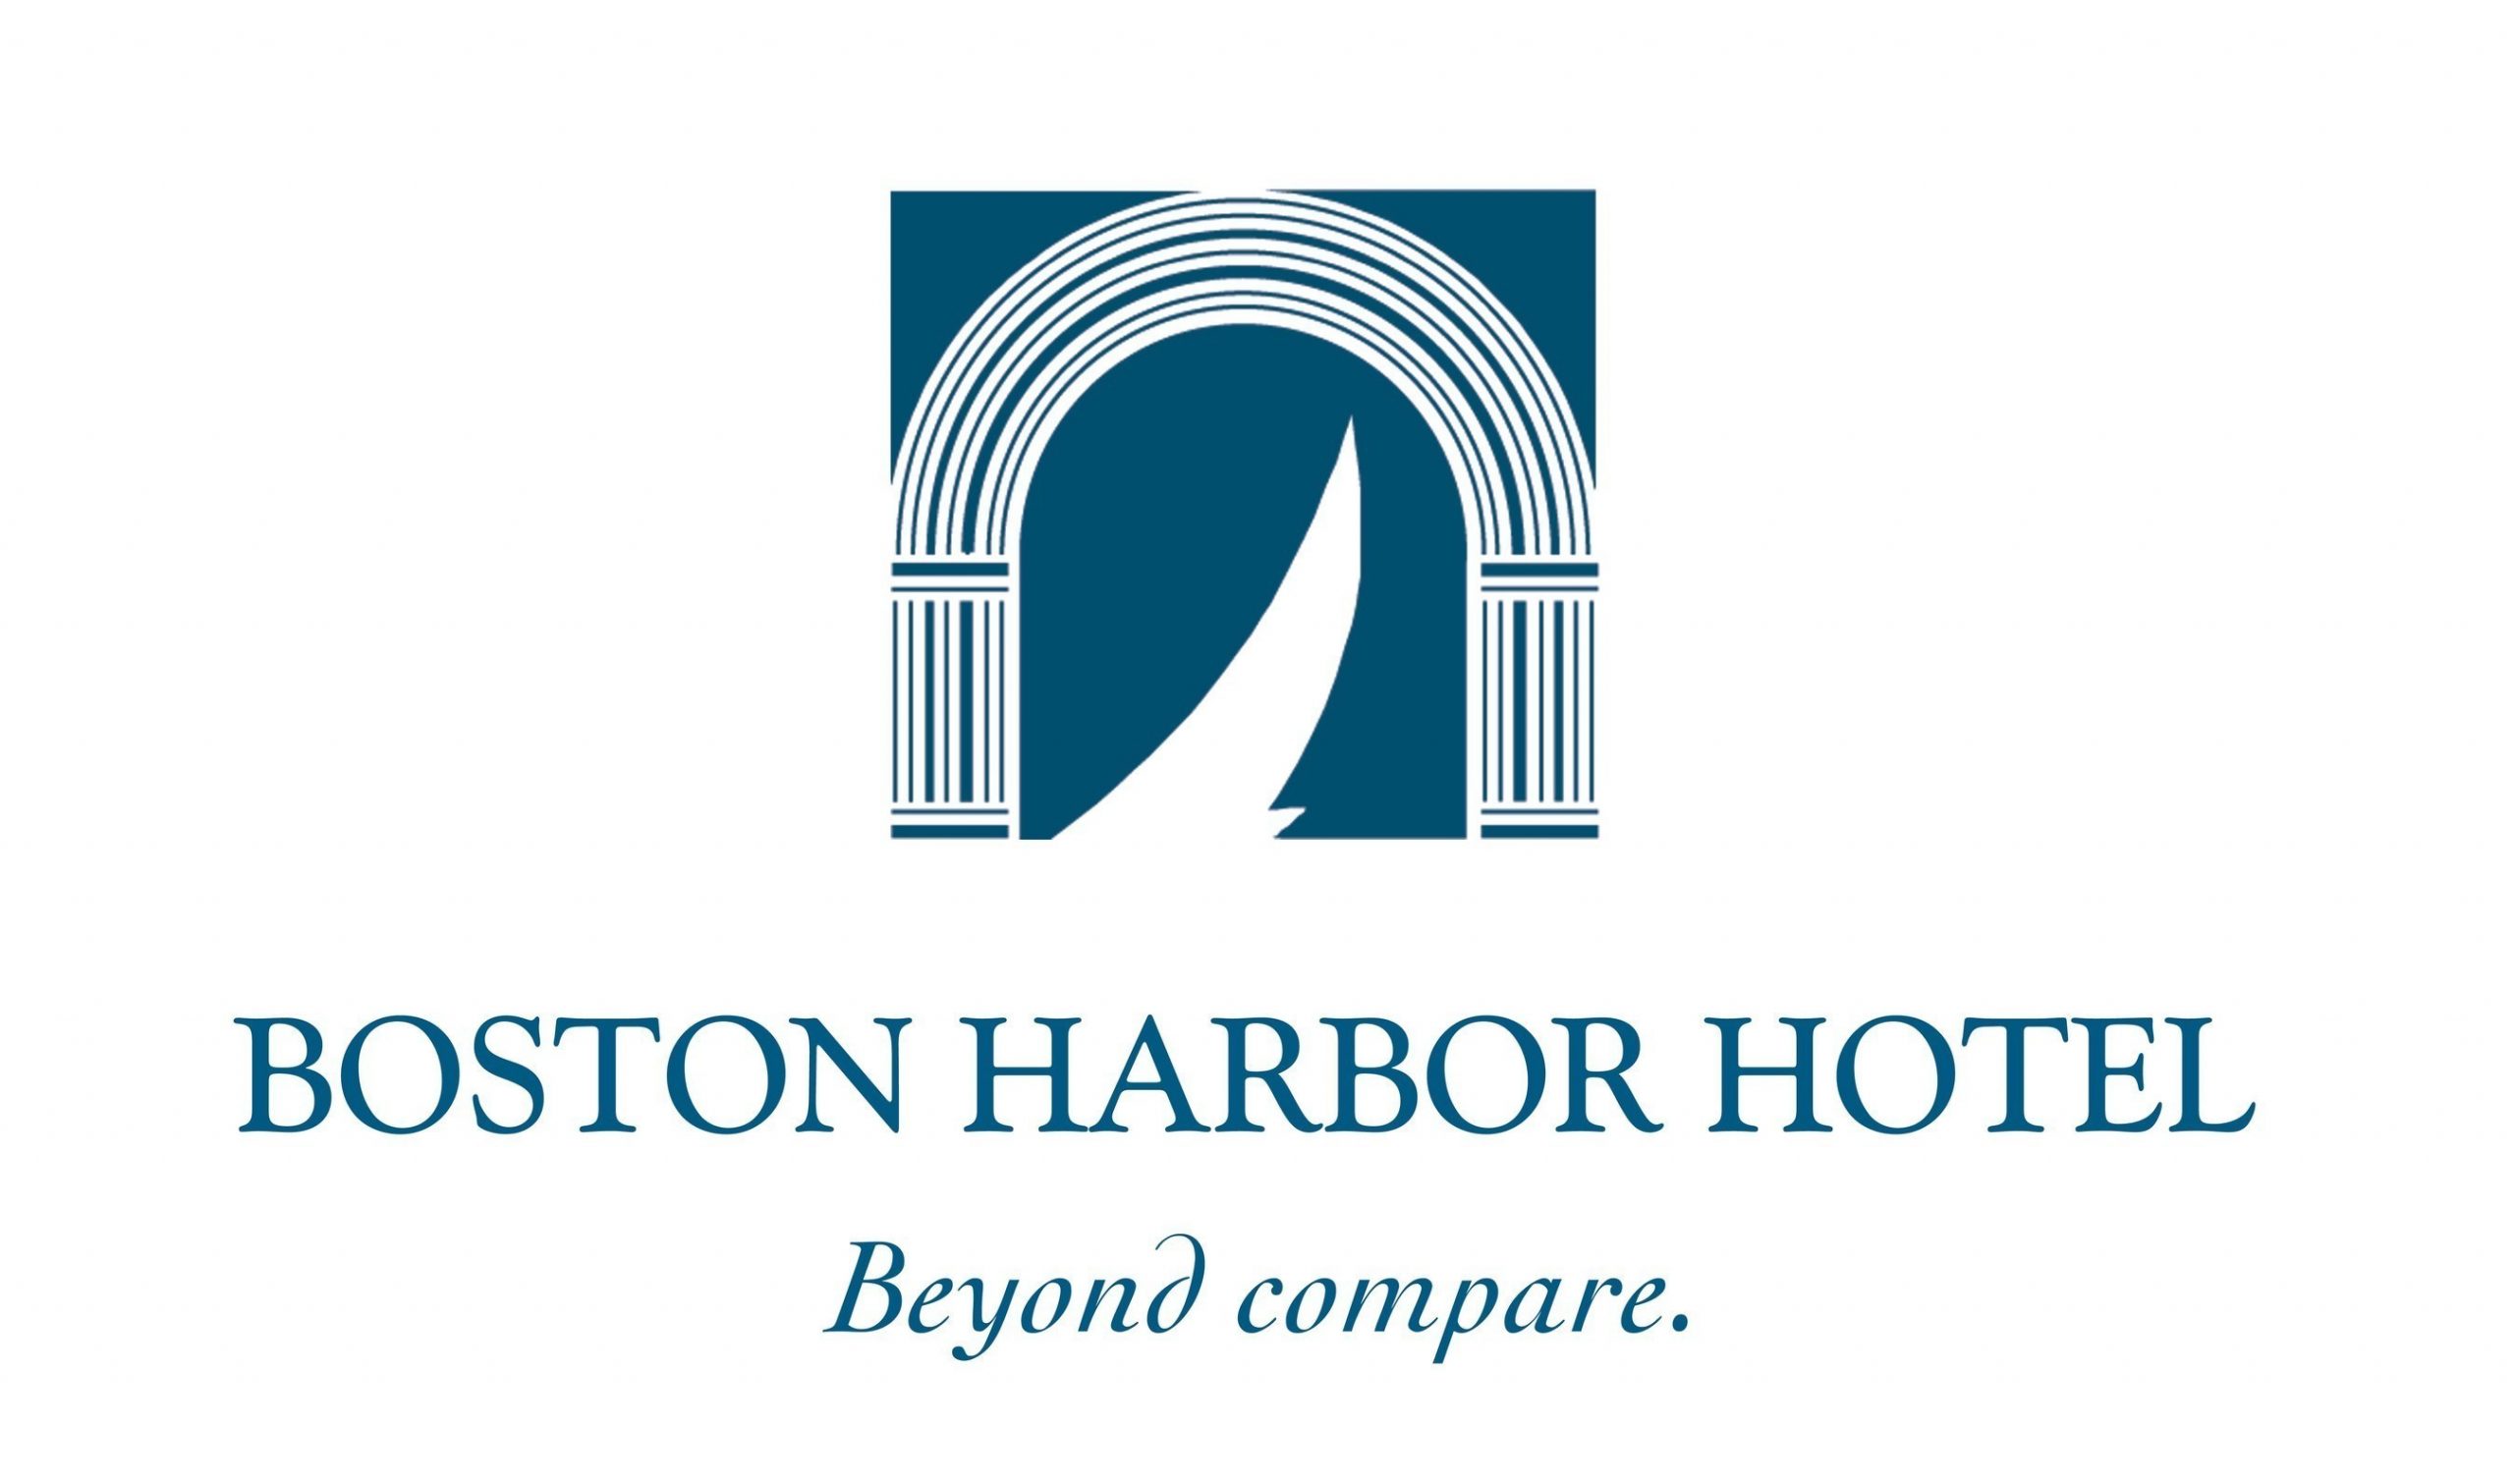 Boston Harbor Hotel Logo